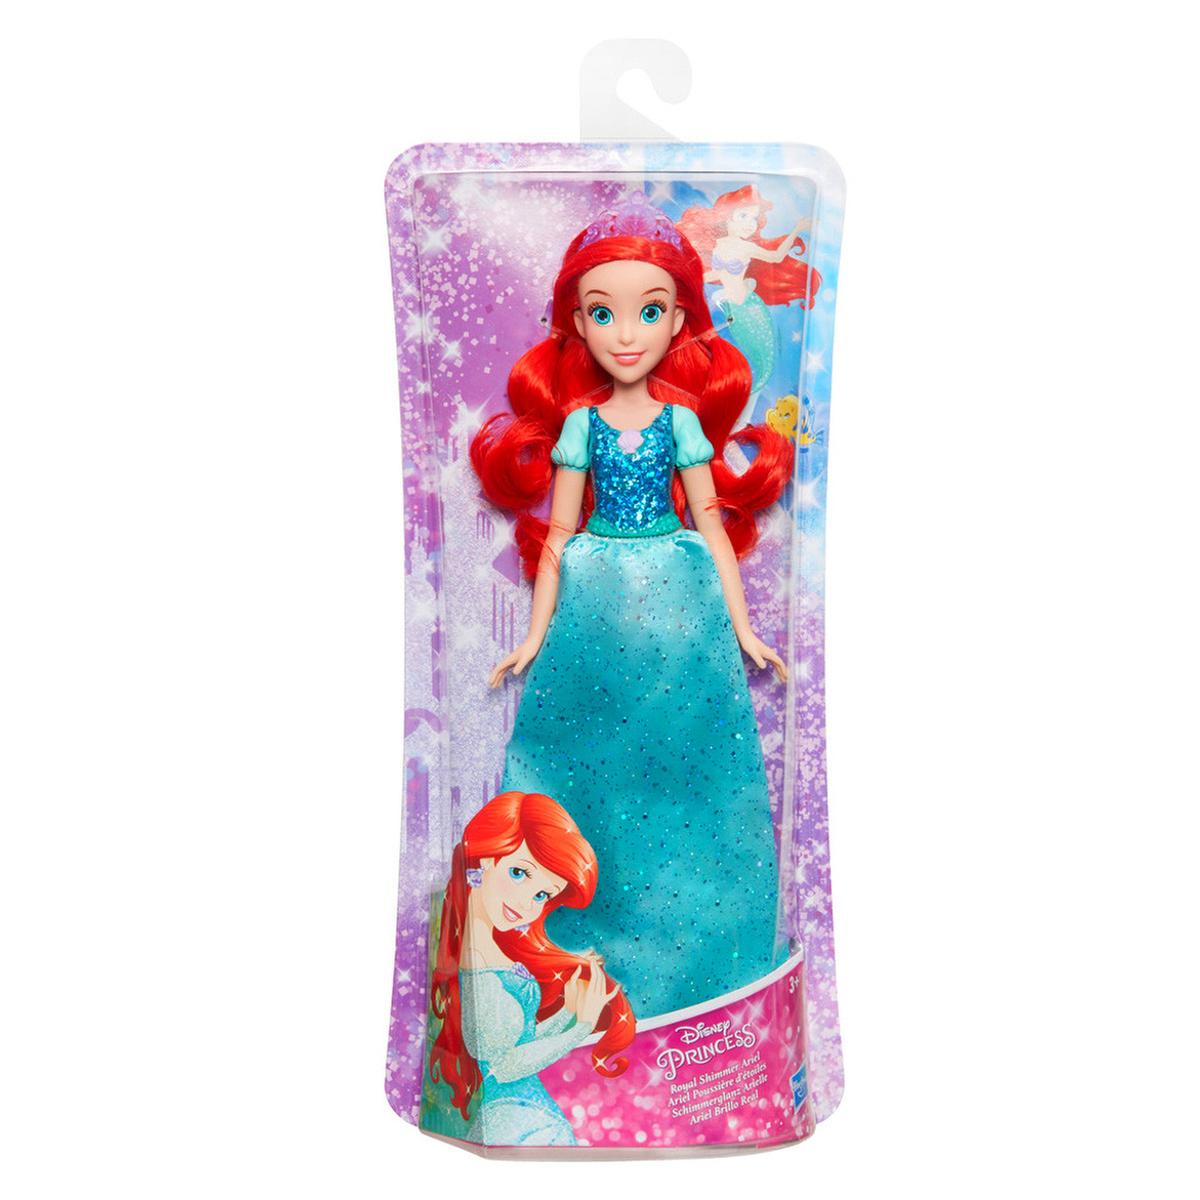 Princesas Disney - Ariel, Cenicienta o Rapunzel - Princesa Brillo Real  (varios modelos) | Muñecas Princesas Disney & Accesorios | Toys"R"Us España